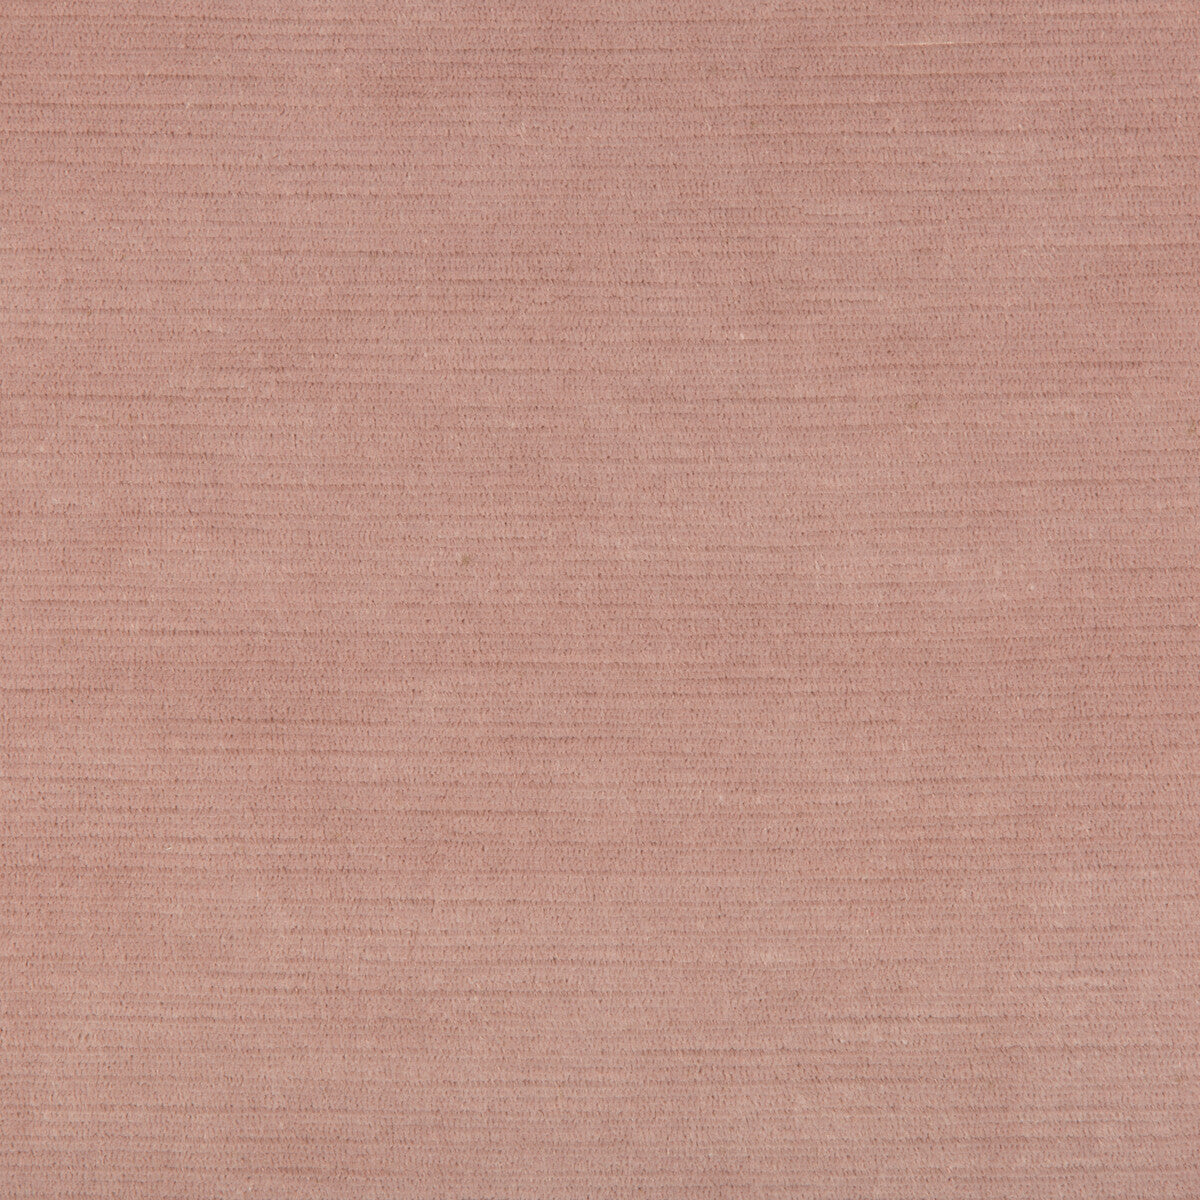 Gemma Velvet fabric in dusk color - pattern 2018148.10.0 - by Lee Jofa in the Gemma Performance Velvet collection